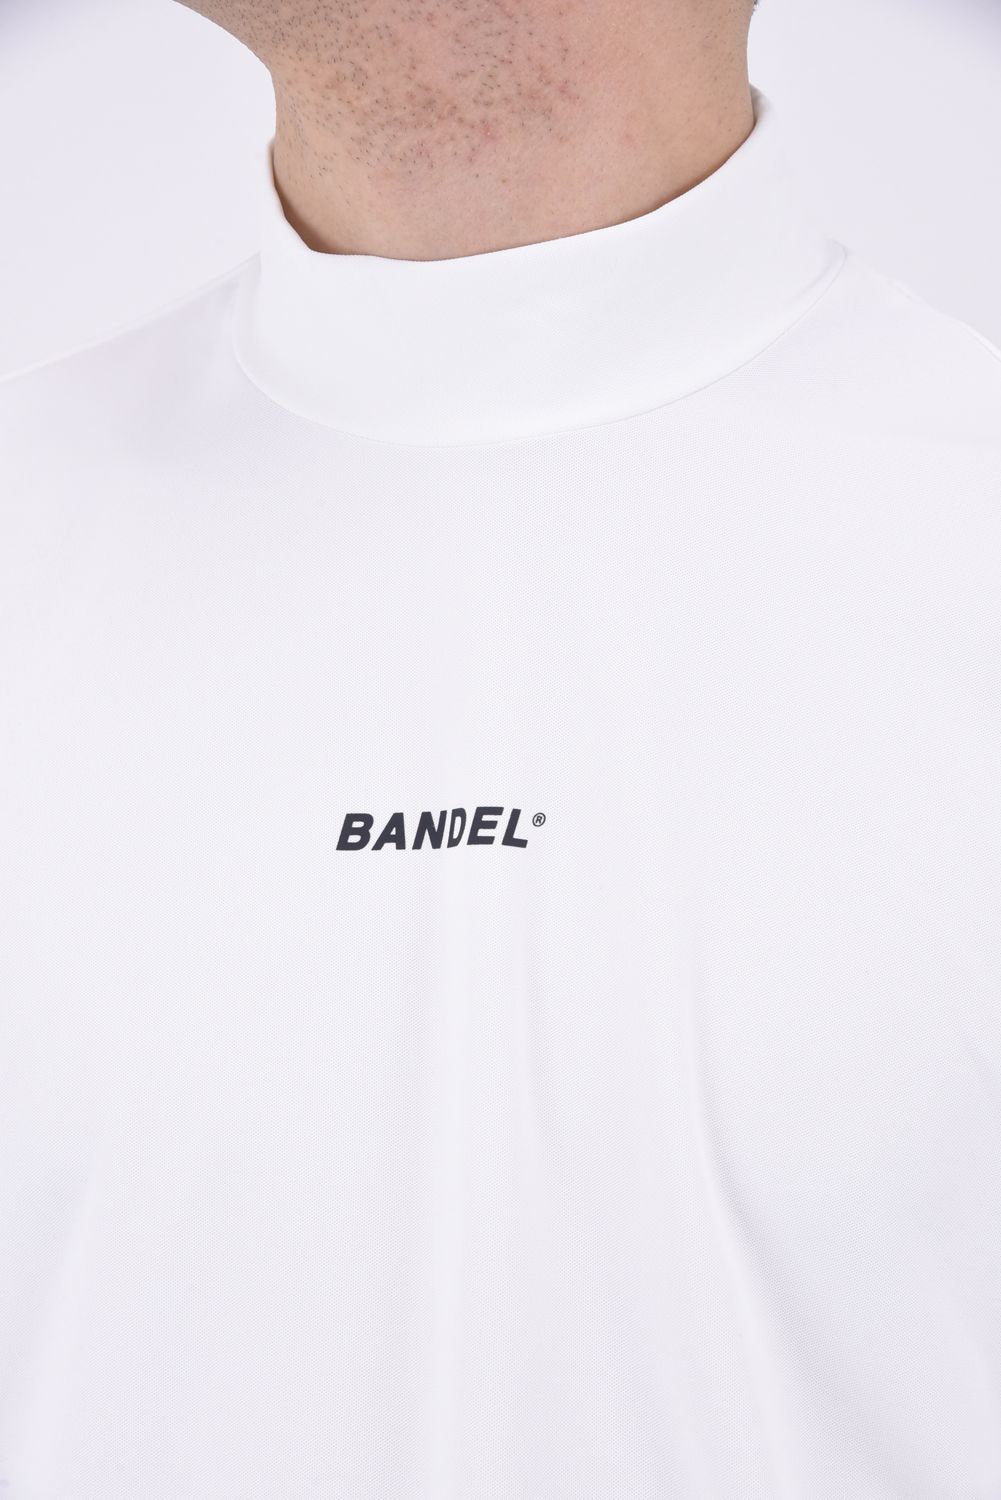 BANDEL GOLF - STRAIGHT LOGO S/S MOCK NECK SHIRTS / ブランドロゴ